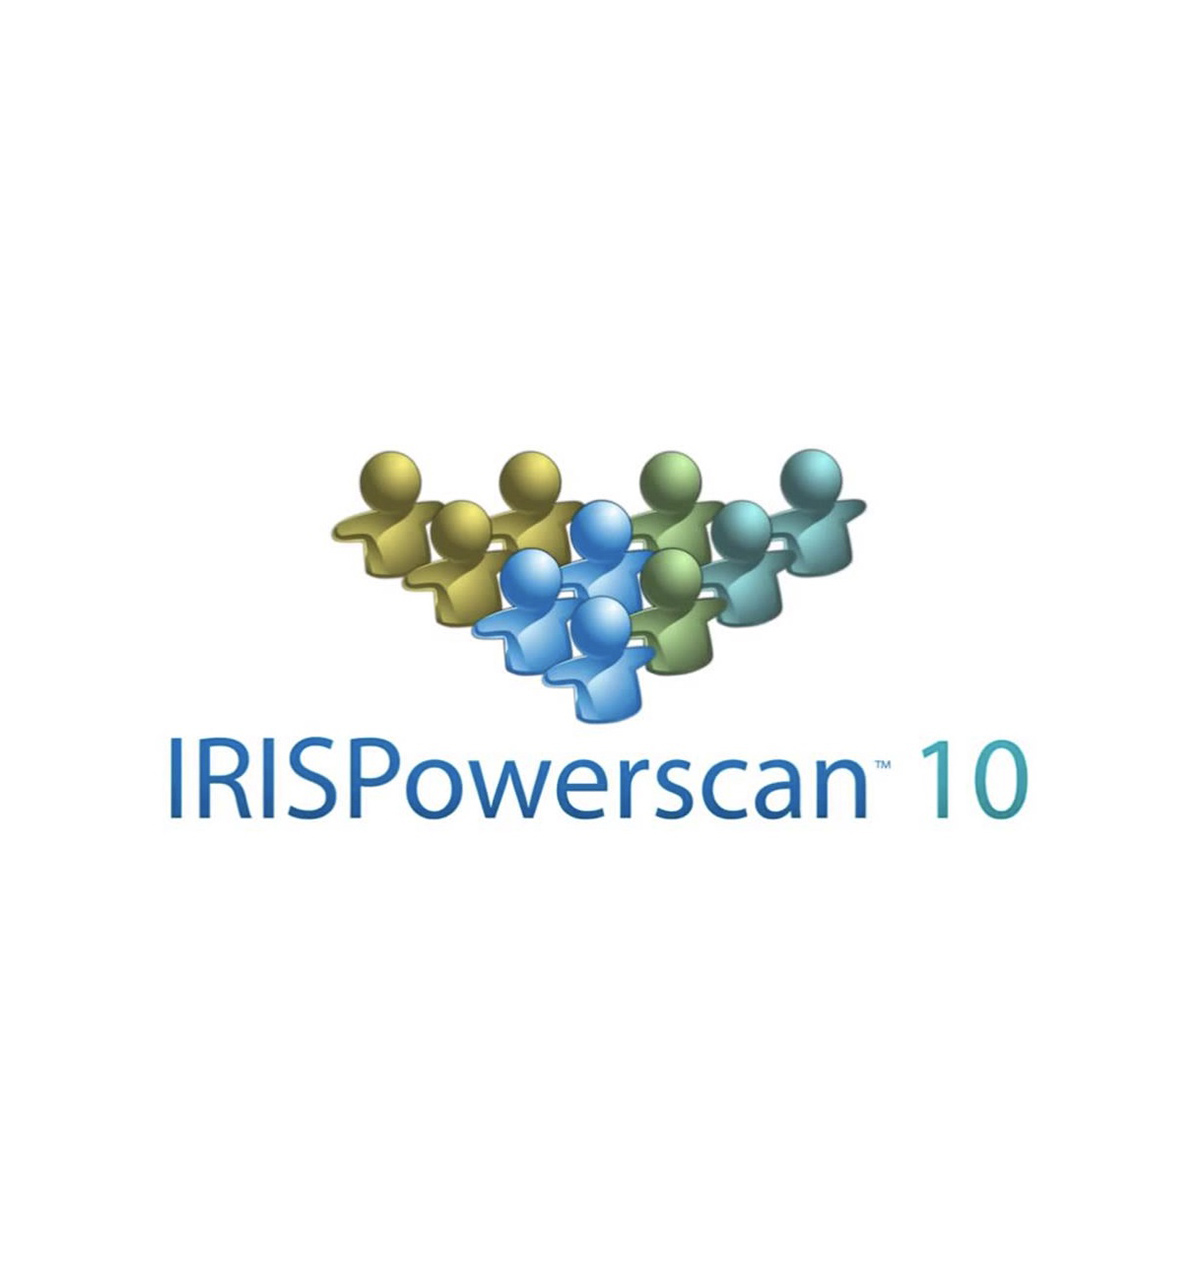 Softwarelösungen IRIS Powerscan Reinhold Kopiersysteme